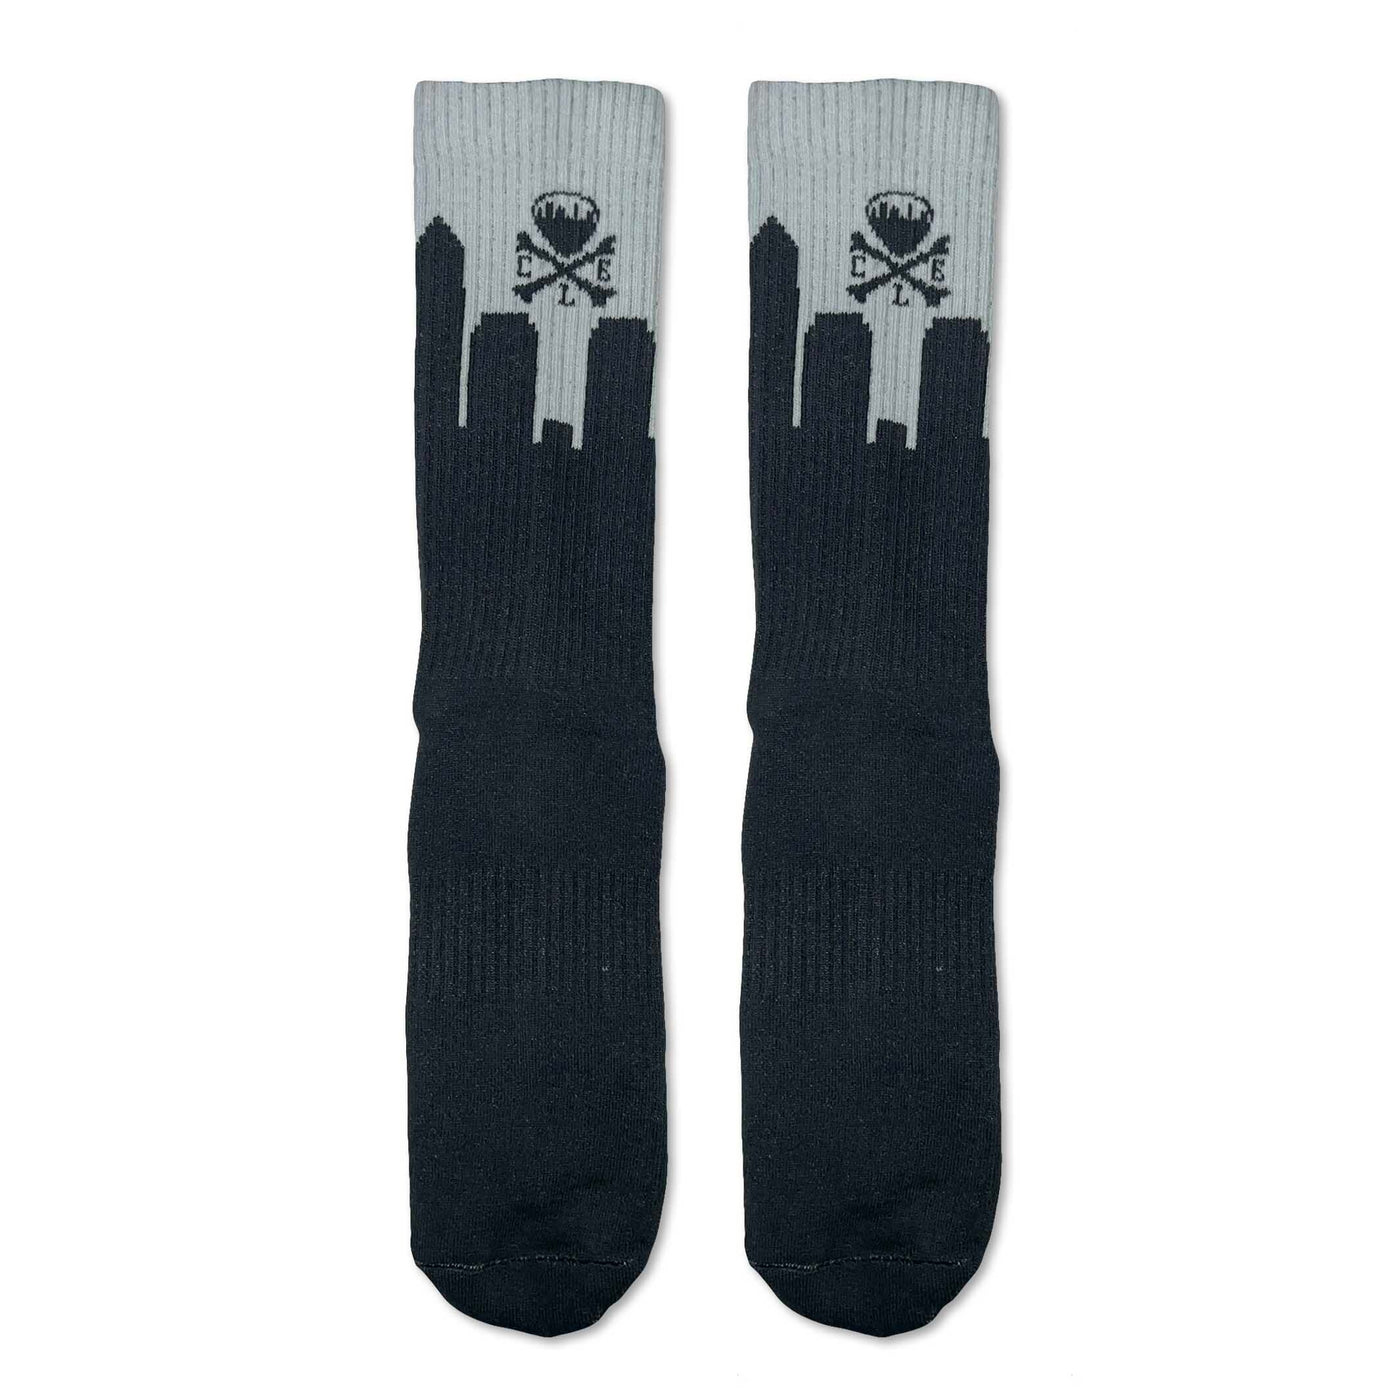 Cleveland Skyline Socks - Black/Grey